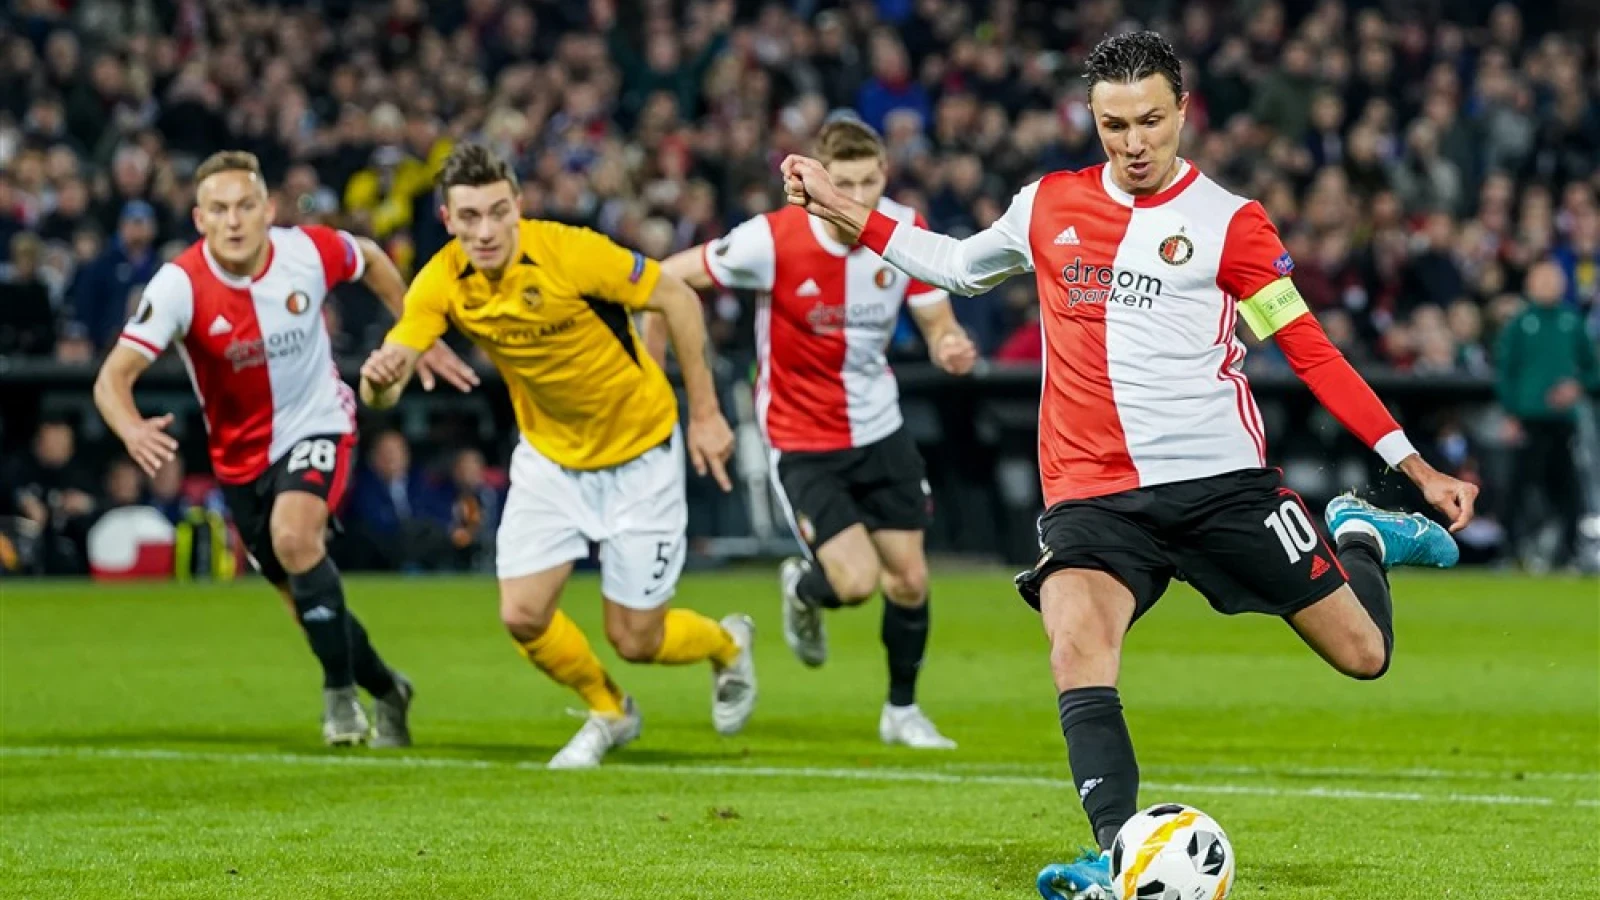 LIVE | Feyenoord - BSC Young Boys 1-1 | Einde wedstrijd